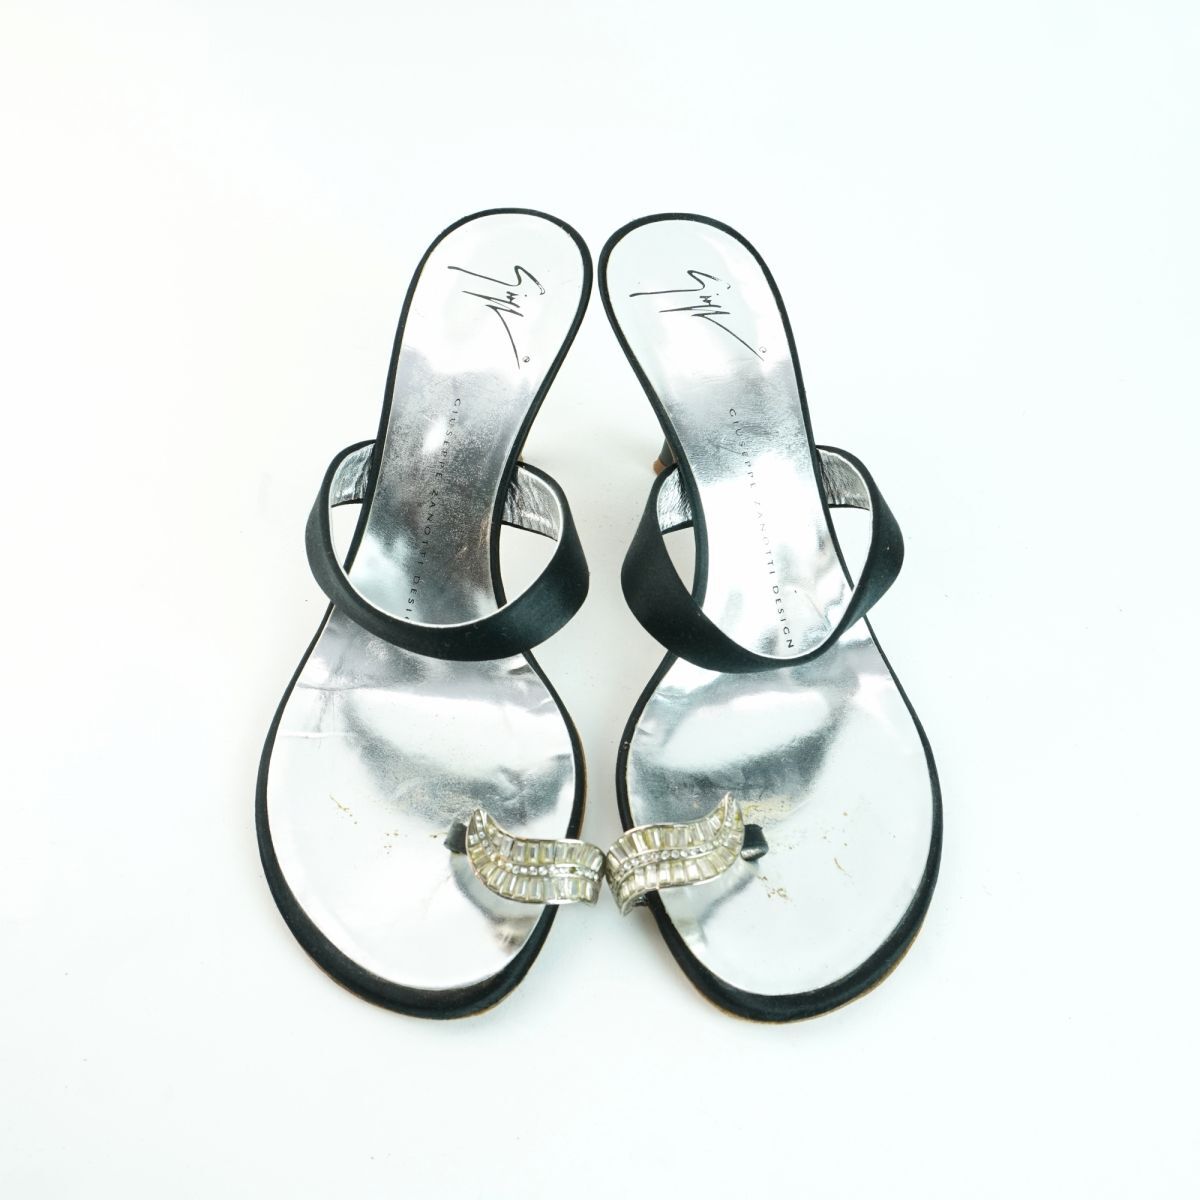 Giuseppe Zanotti Design Giuseppe Zanotti 38 24.5 сандалии Италия производства каблук цветной камень чёрный черный серебряный /NC68